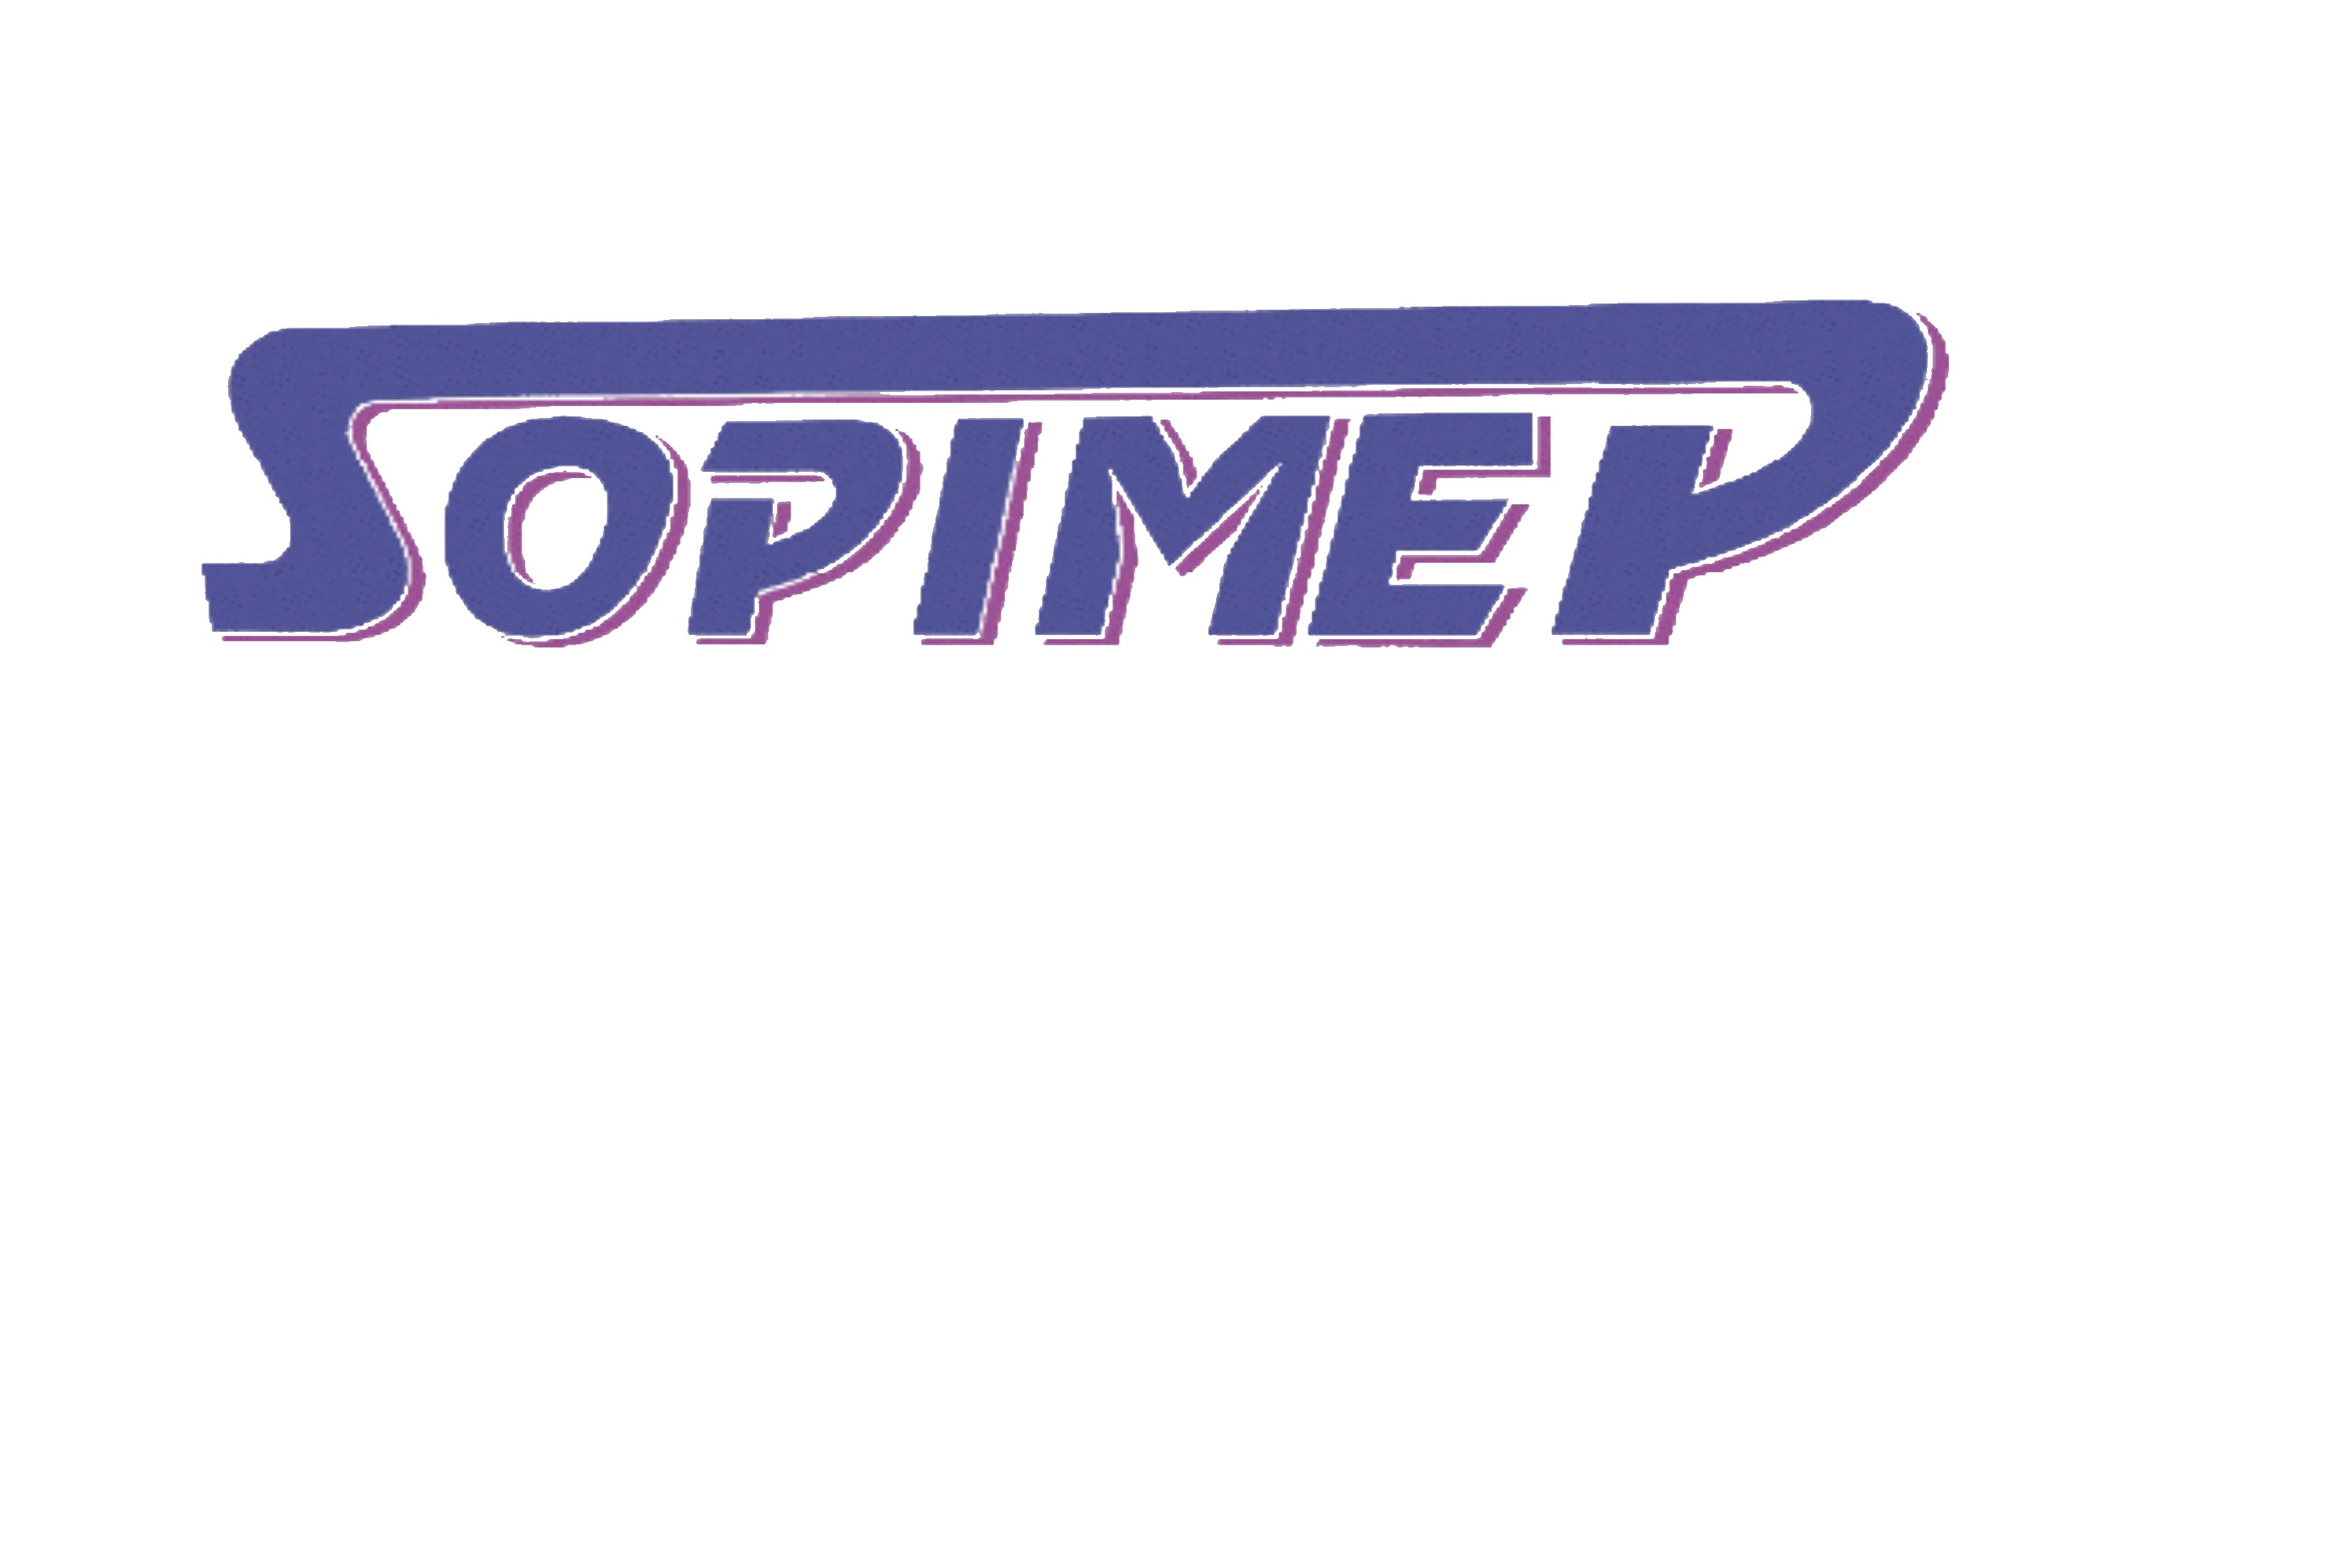 SOPIMEP logo